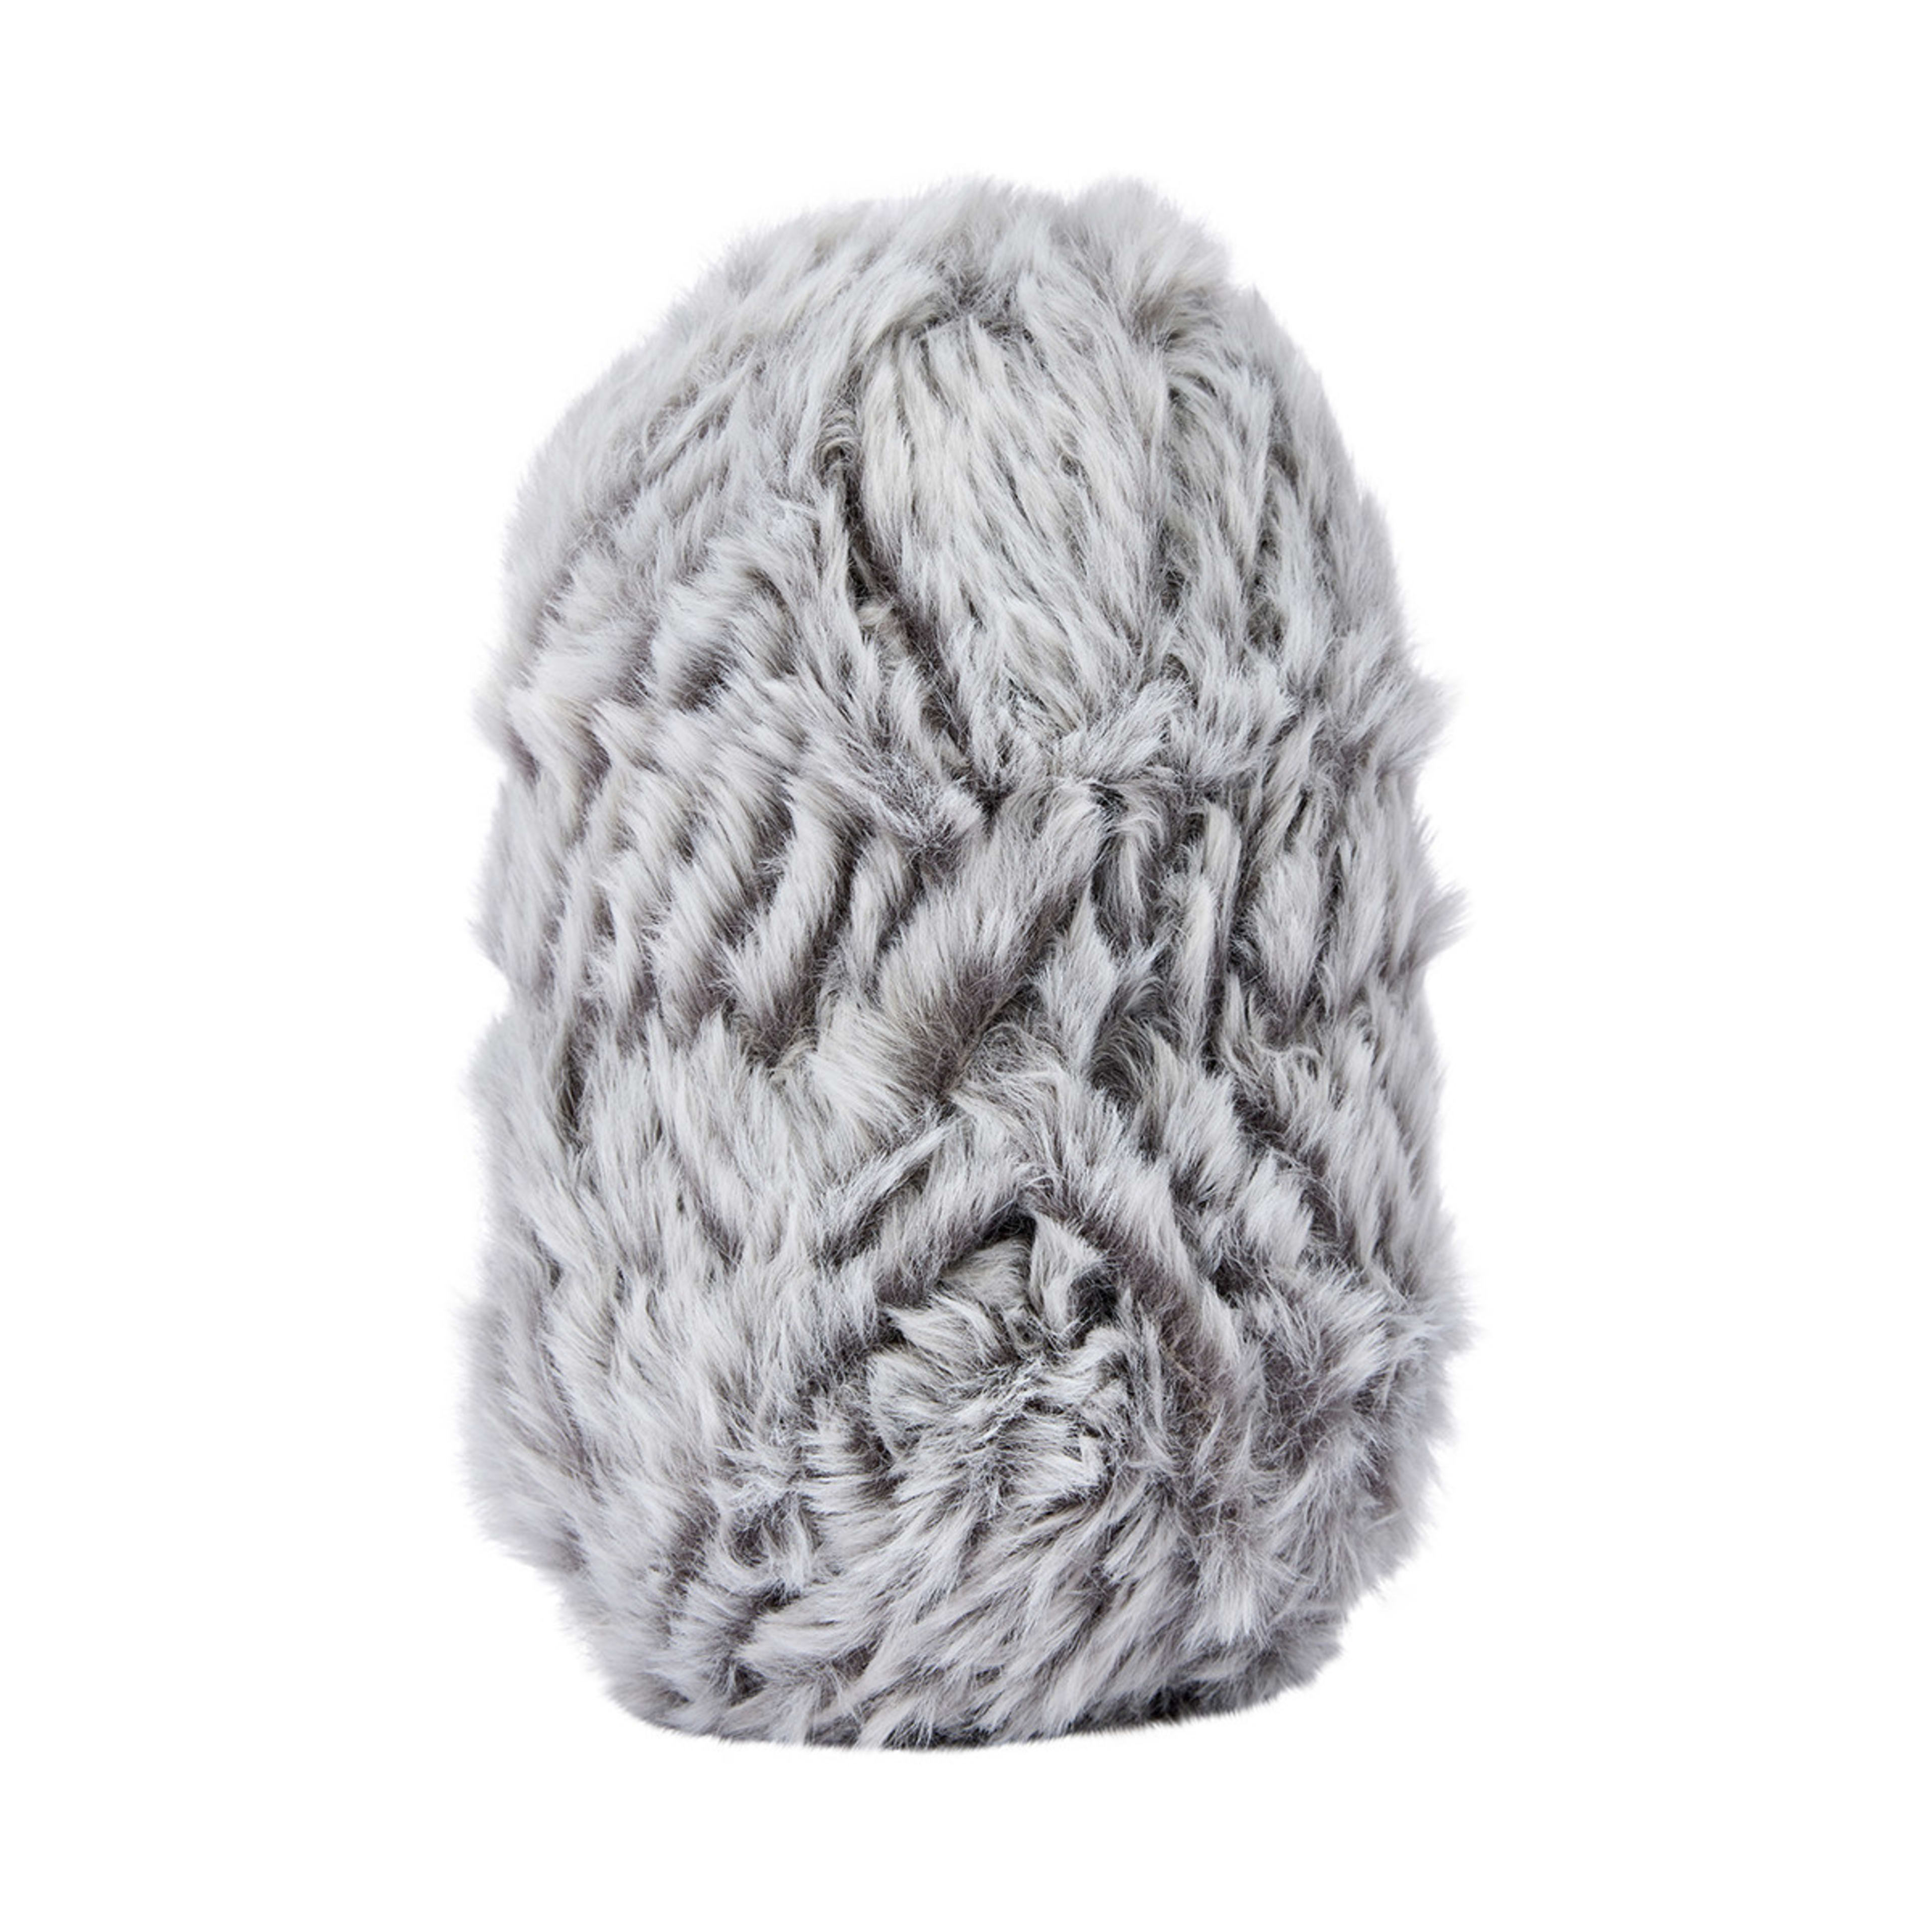 Faux Fur Yarn - Light Grey - Kmart